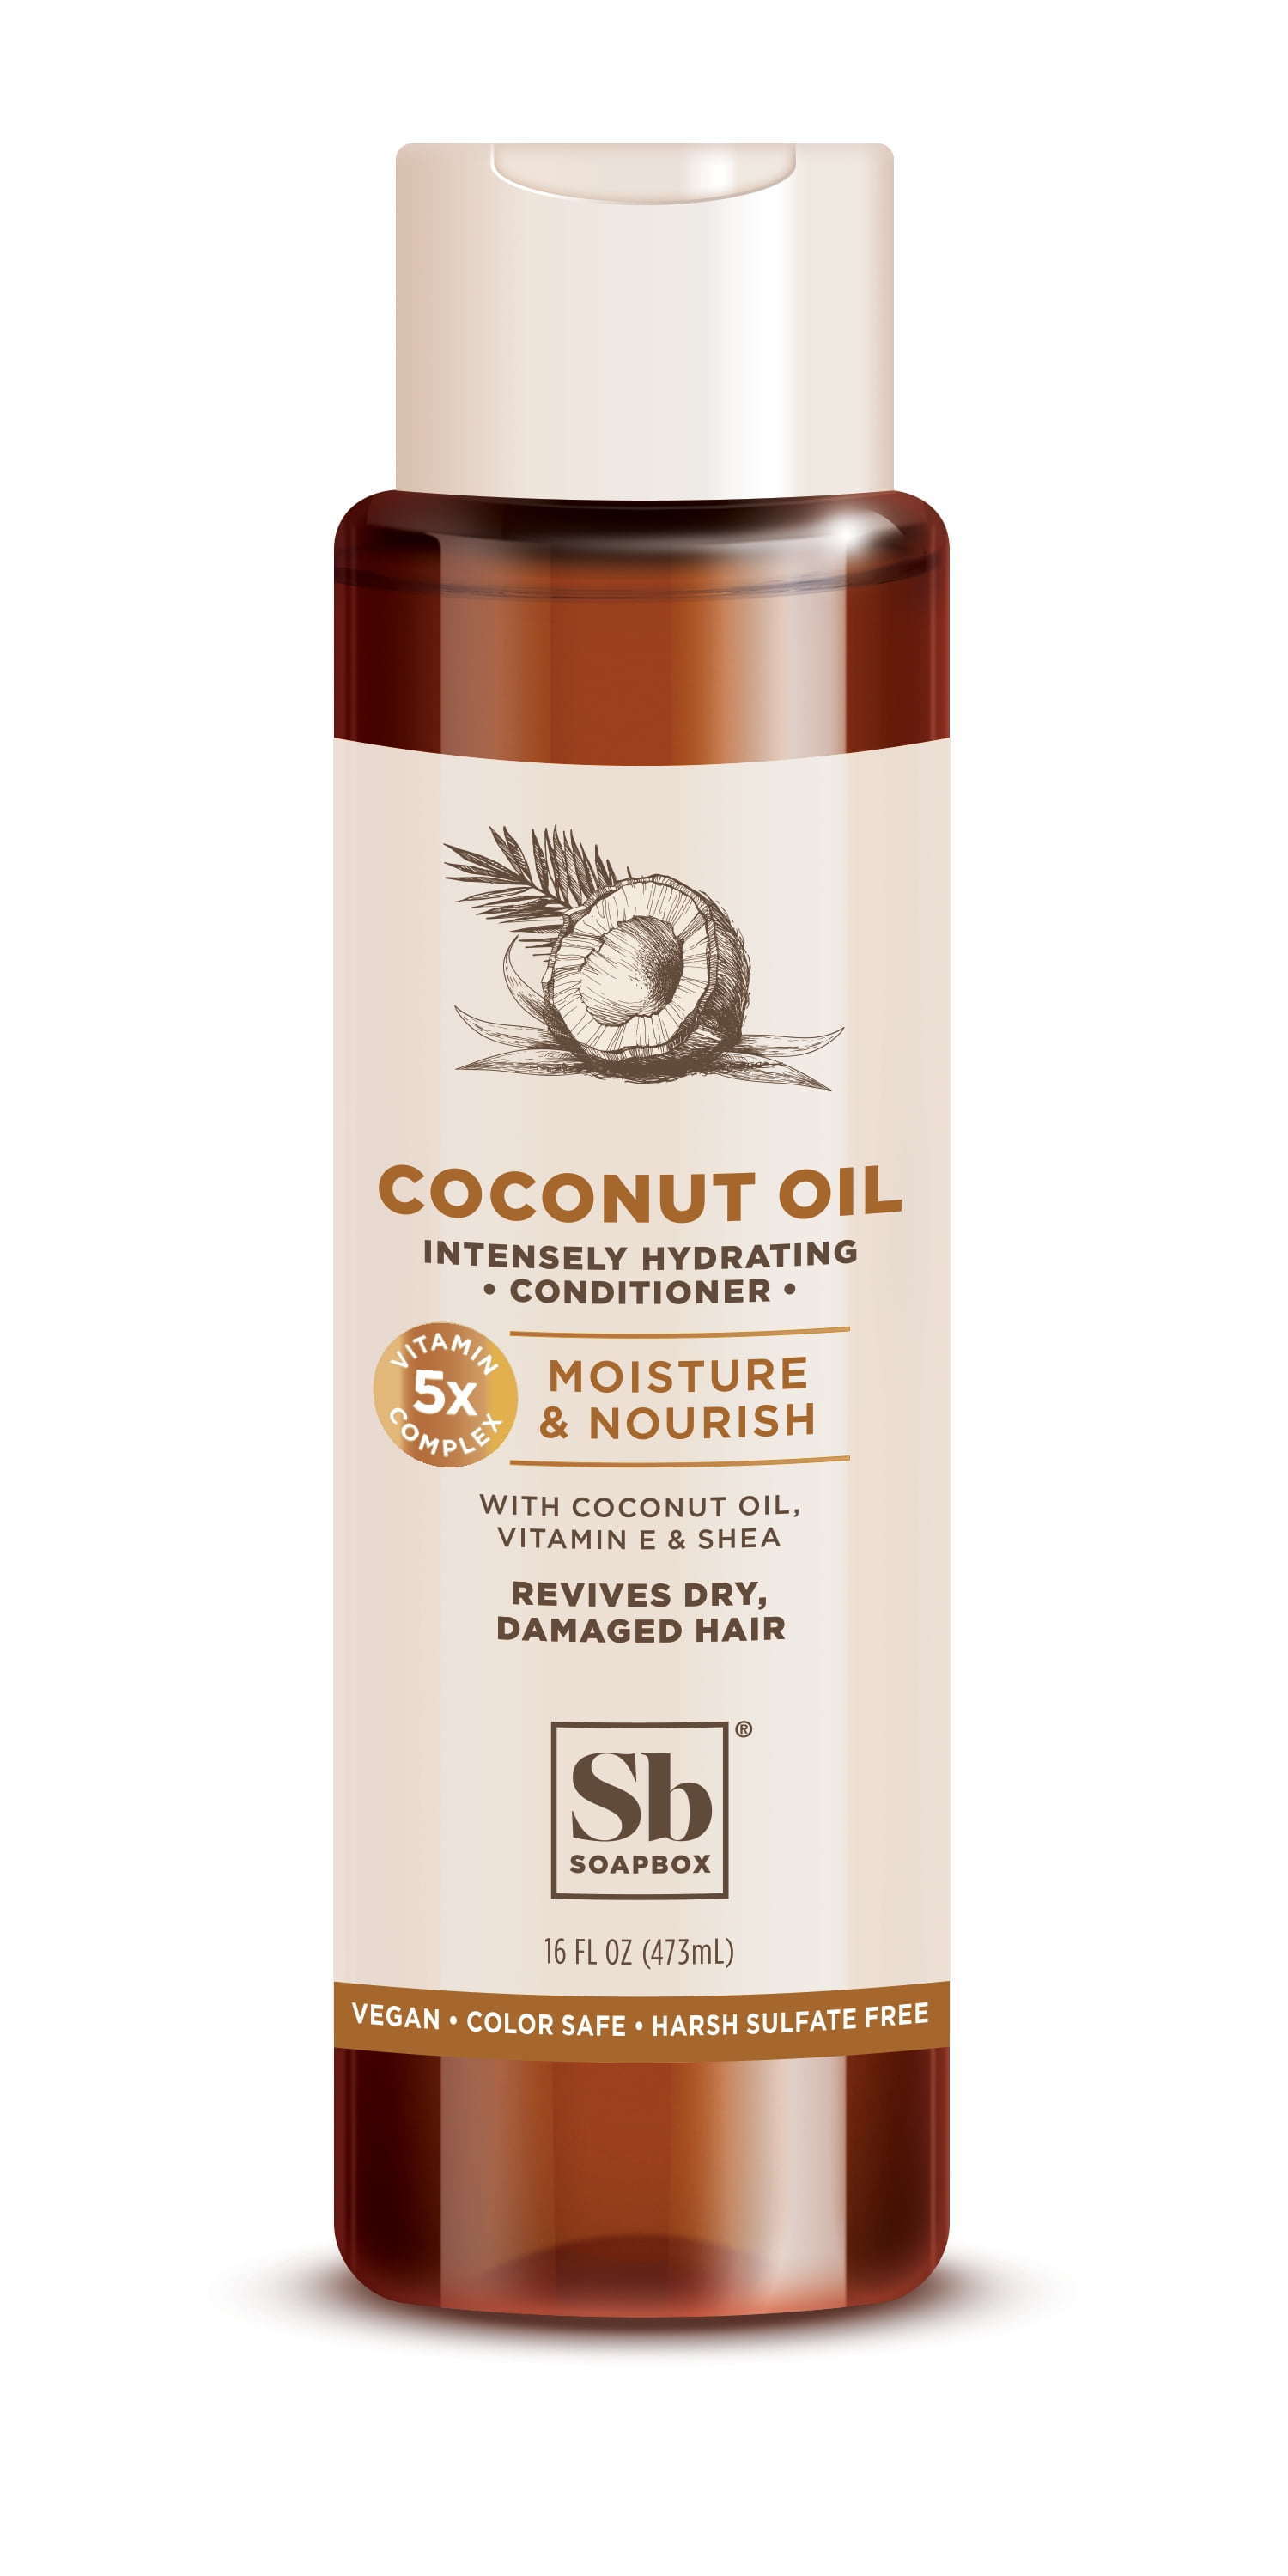 Soapbox Coconut Oil Moisture & Nourish Conditioner with Shea Butter, 16 oz